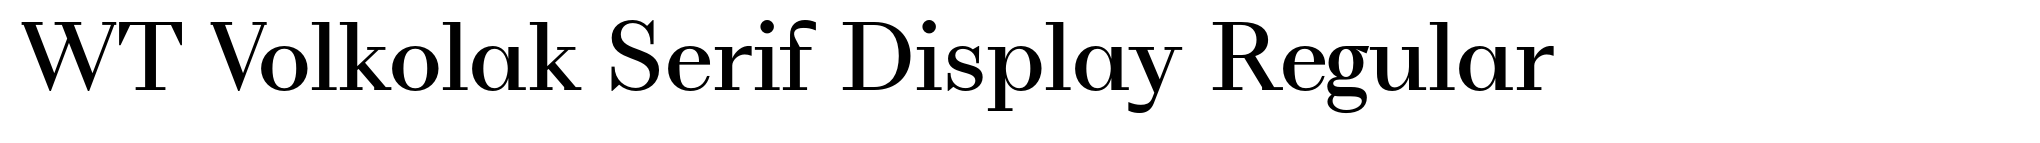 WT Volkolak Serif Display Regular image